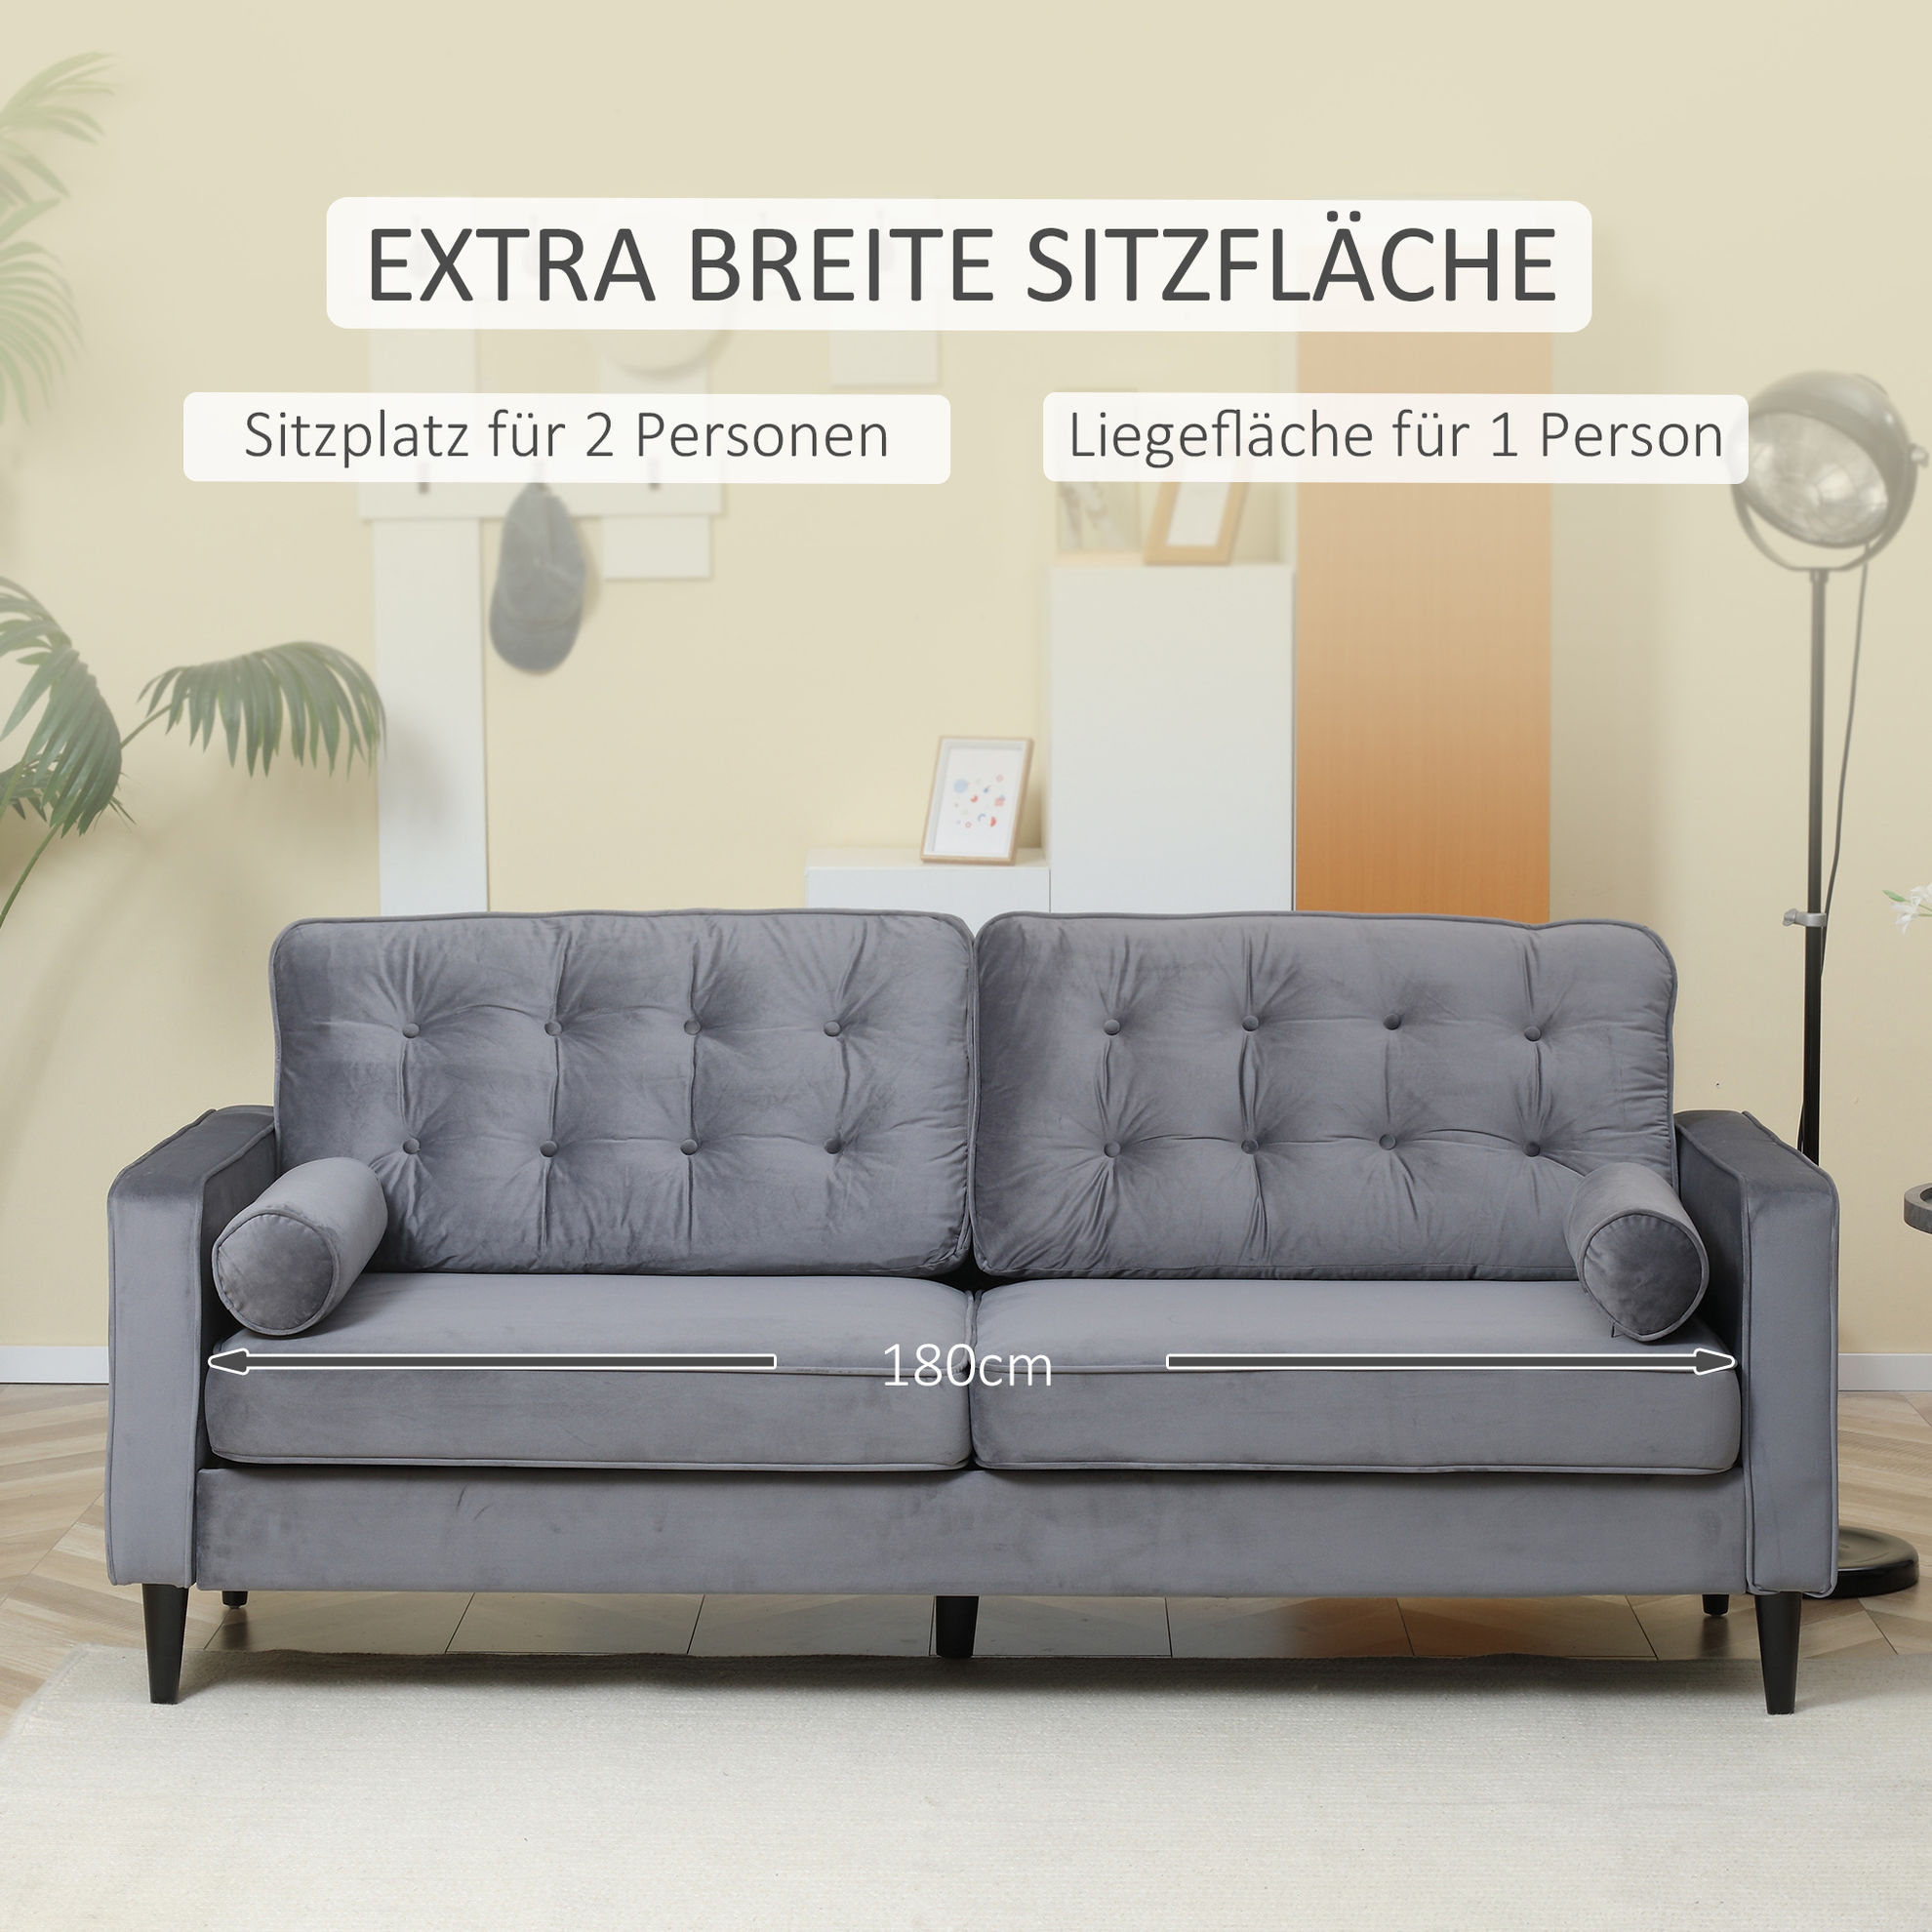 3-Sitzer-Sofa mit Sitzkissen grau Farbe: grau | Weltbild.de